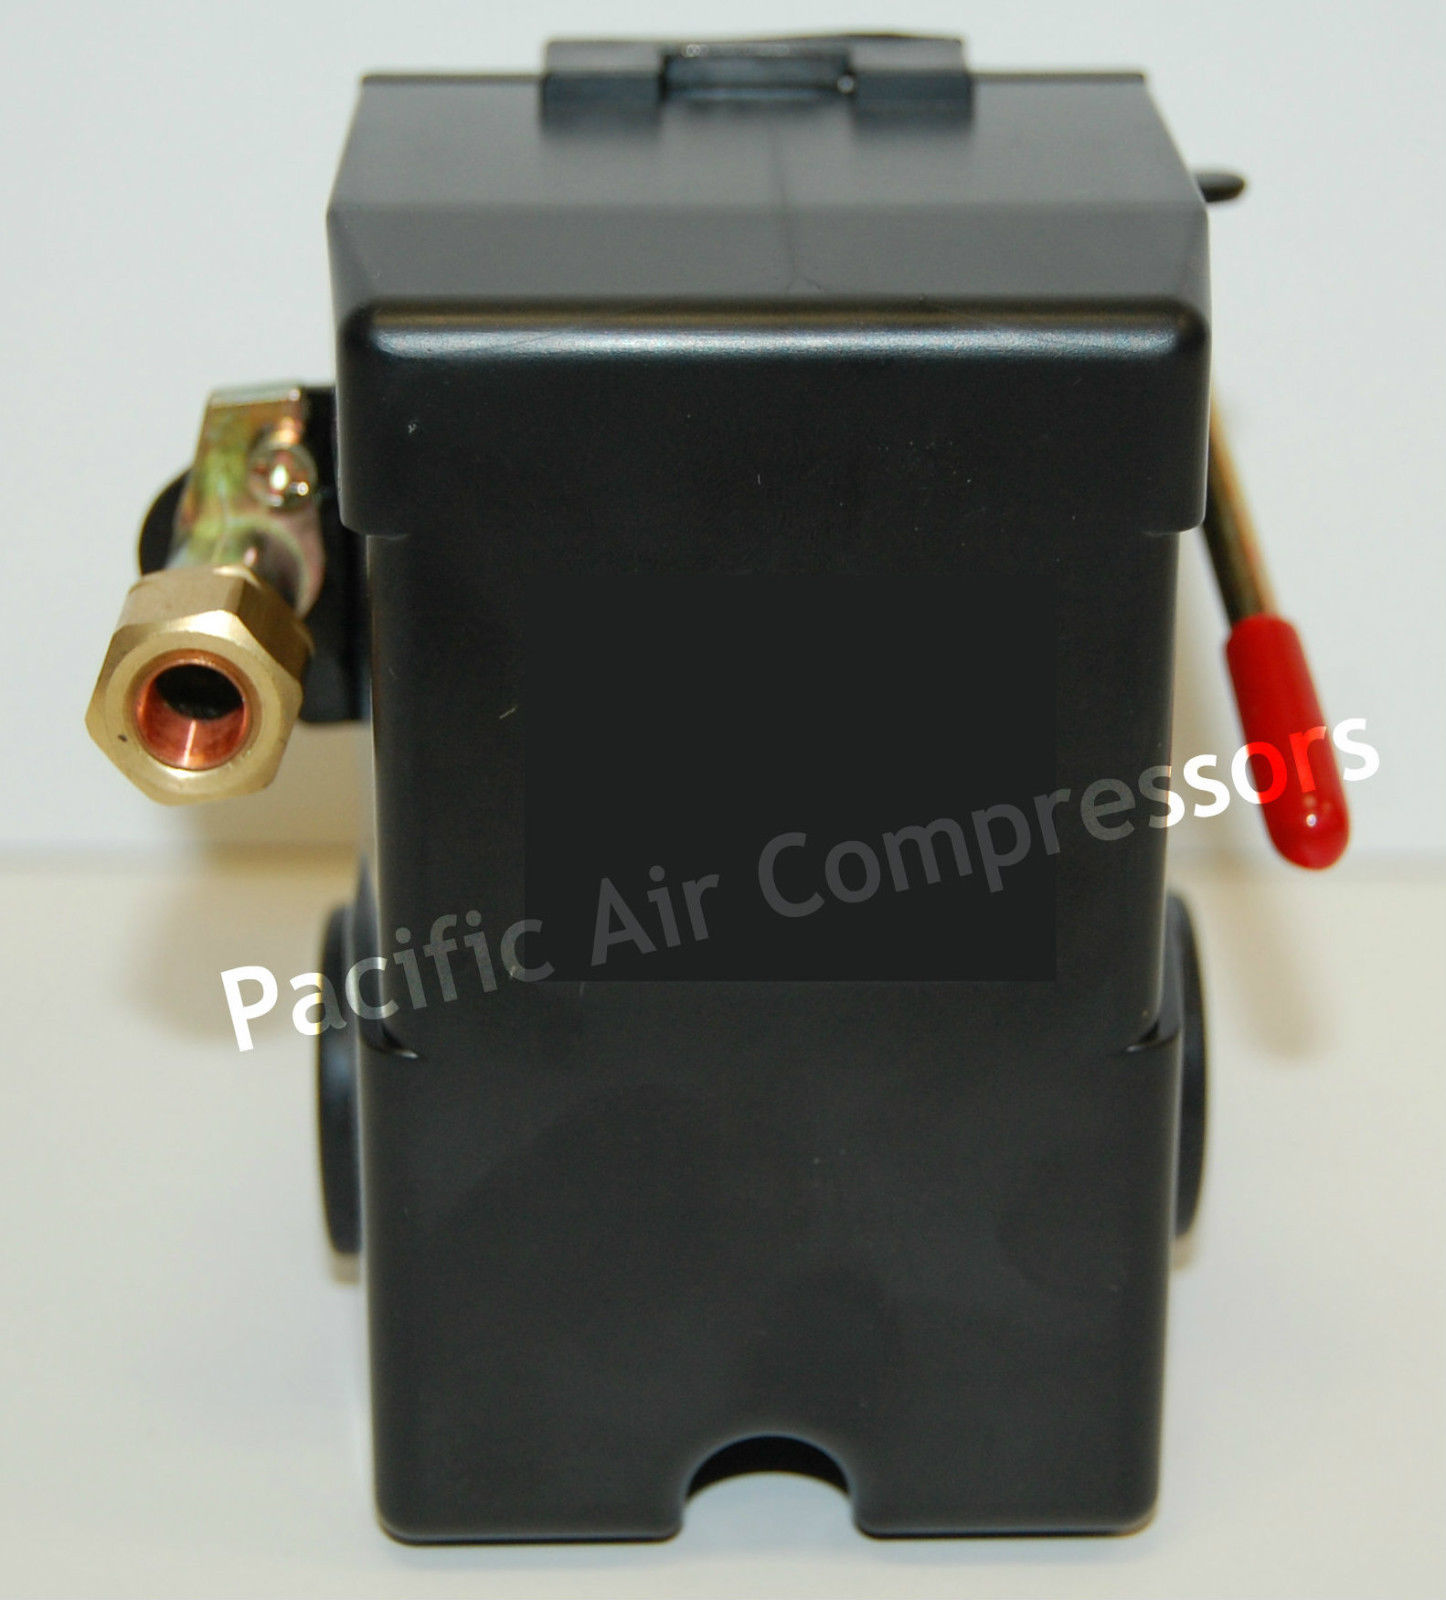 Chicago pneumatic air compressor user manual